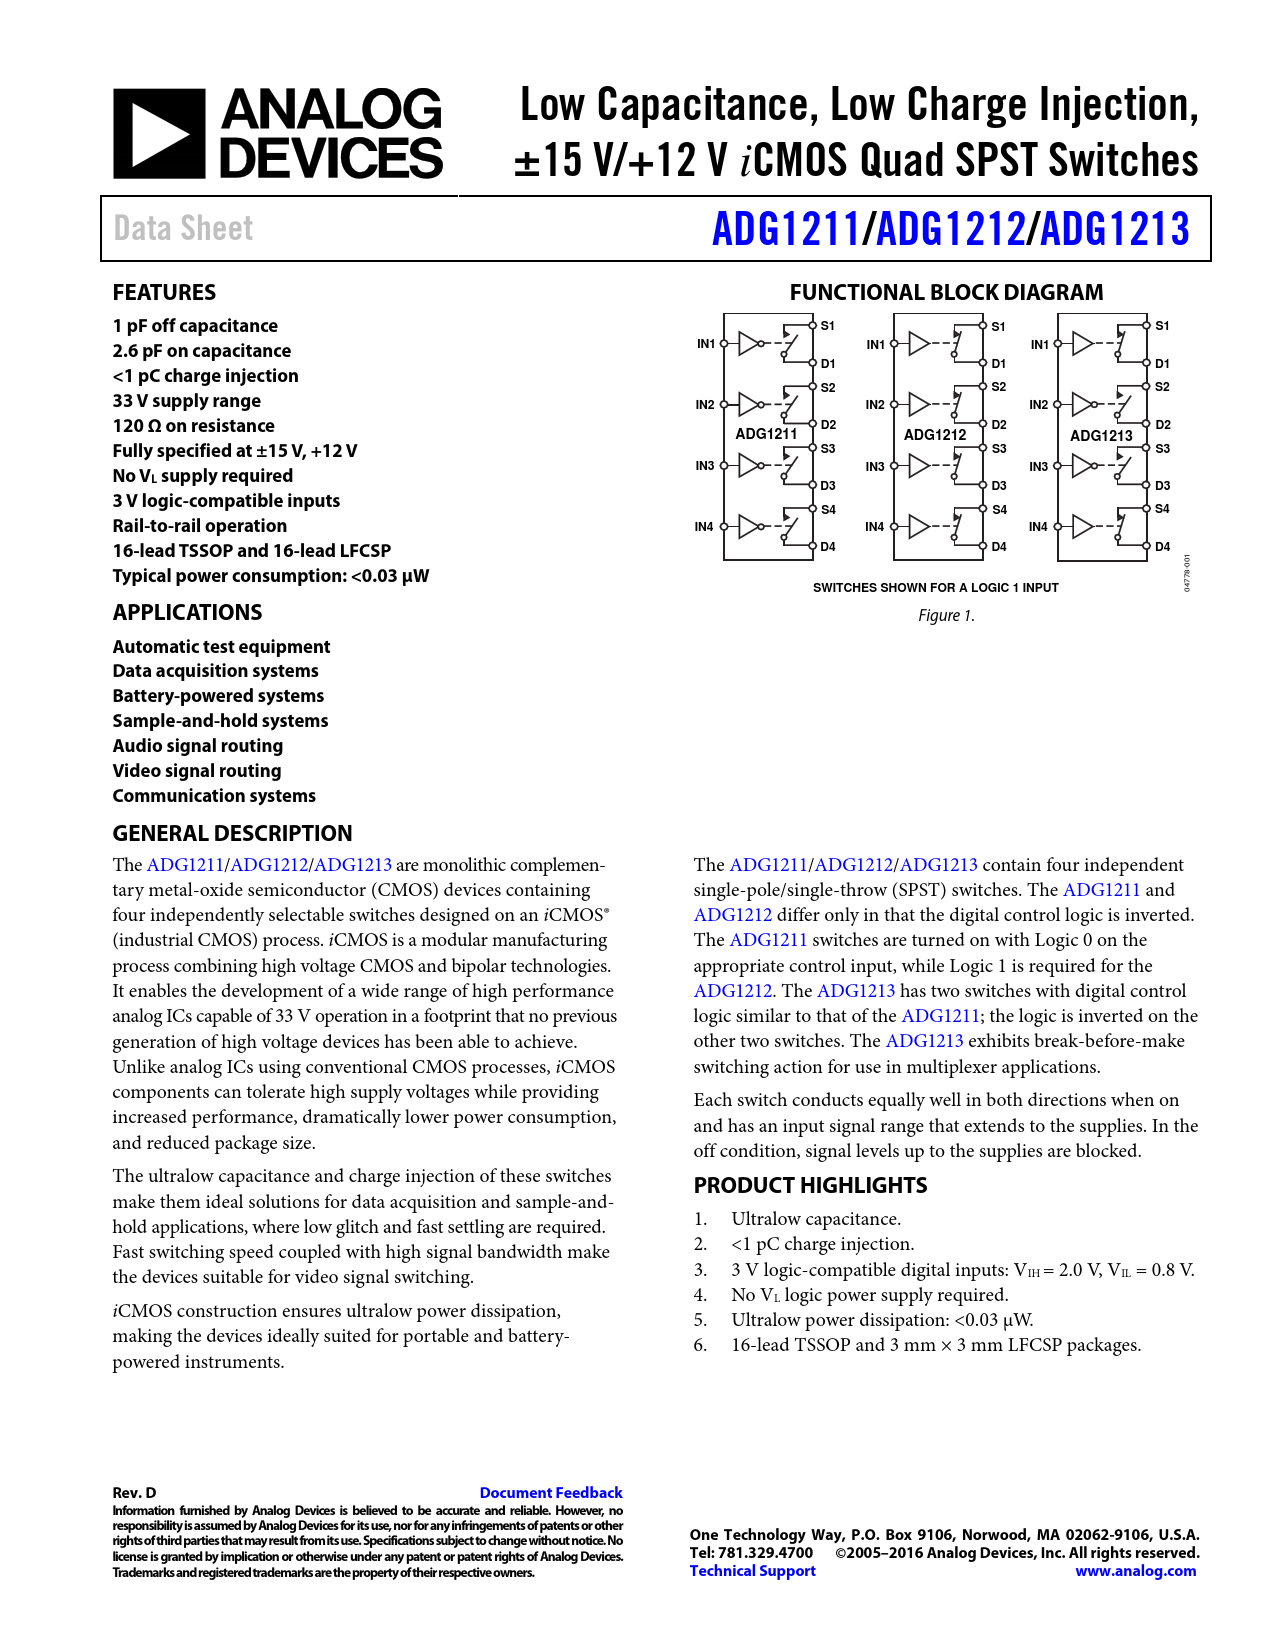 Datasheet ADG1211, ADG1212, ADG1213 Analog Devices, Revision: D